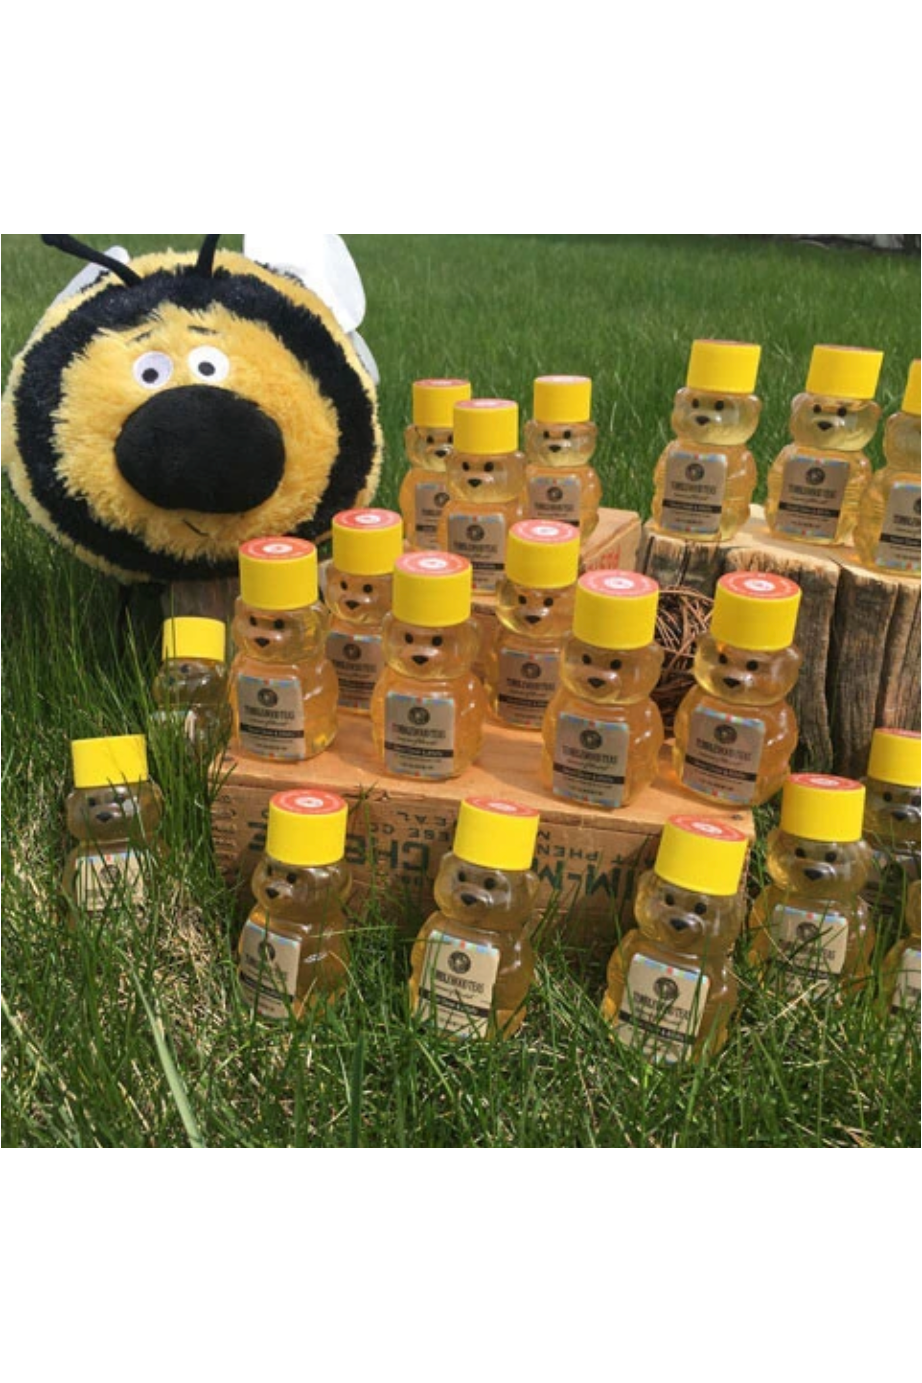 Tumblewood Teas - Bumble Bears - Sweet Clover and Alfalfa Honey